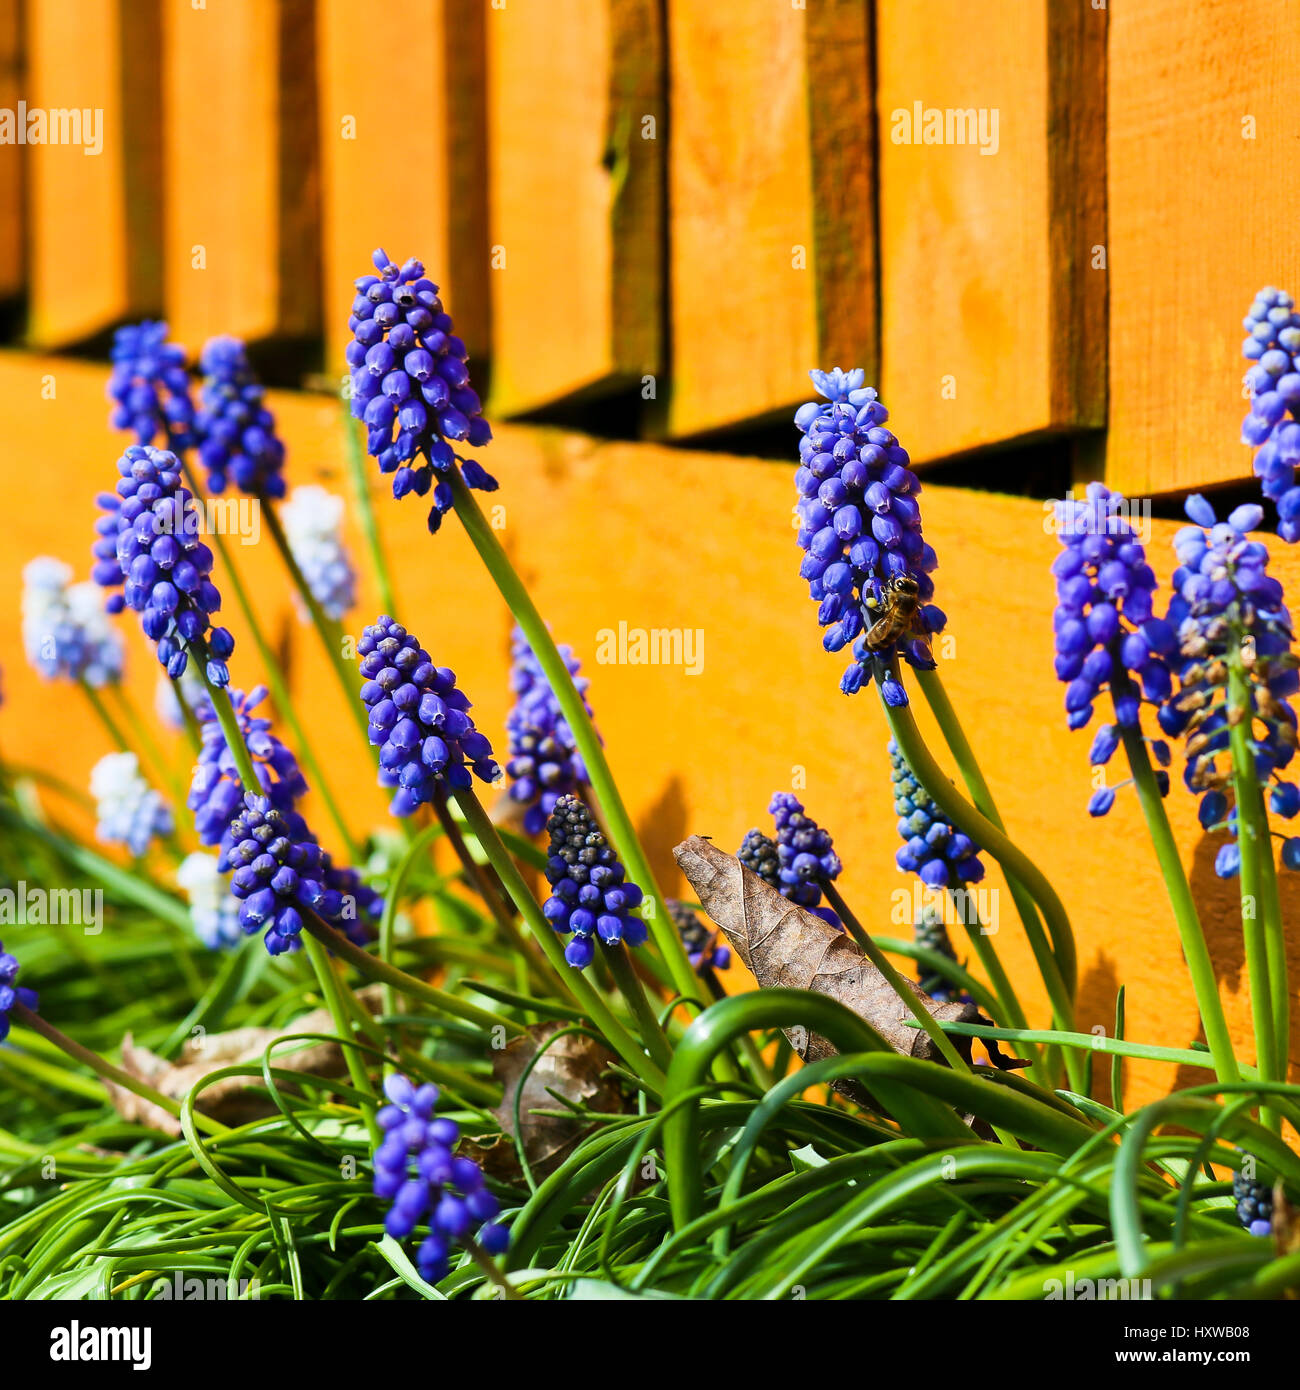 Muscari armeniacum. Grape hyacinths, honey bee polinating  flowers in the garden with orange fence Stock Photo